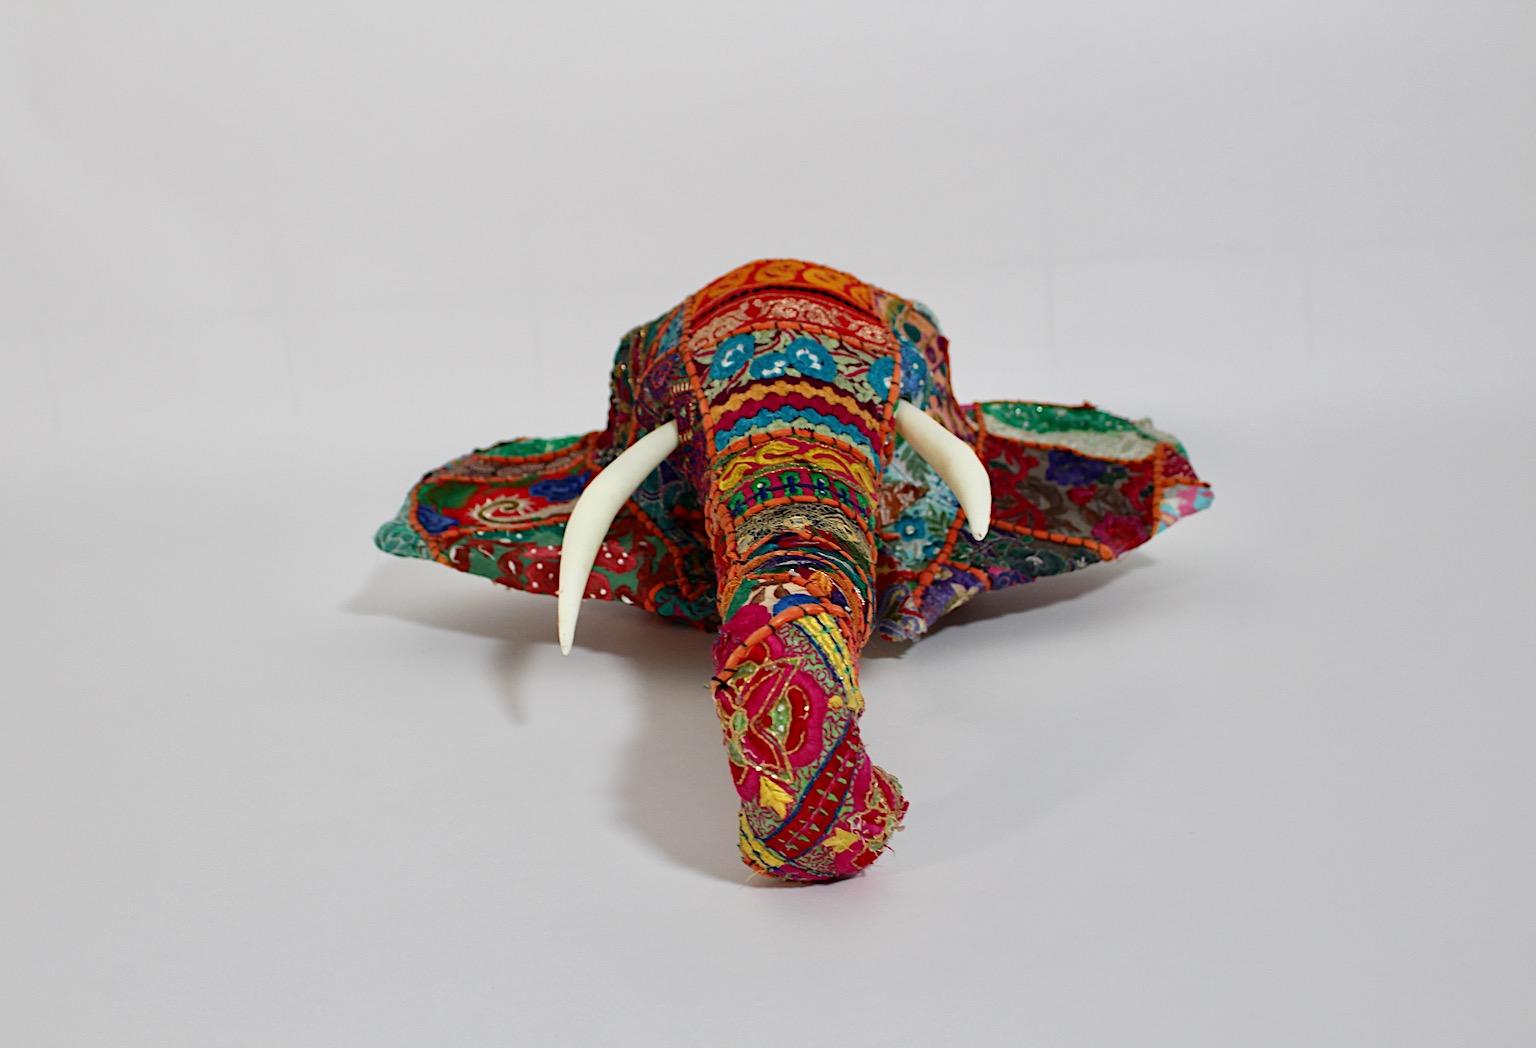 20th Century Animal Folk Art Vintage Patchwork Fabric Embroidery Elephant Head c 1980s India For Sale